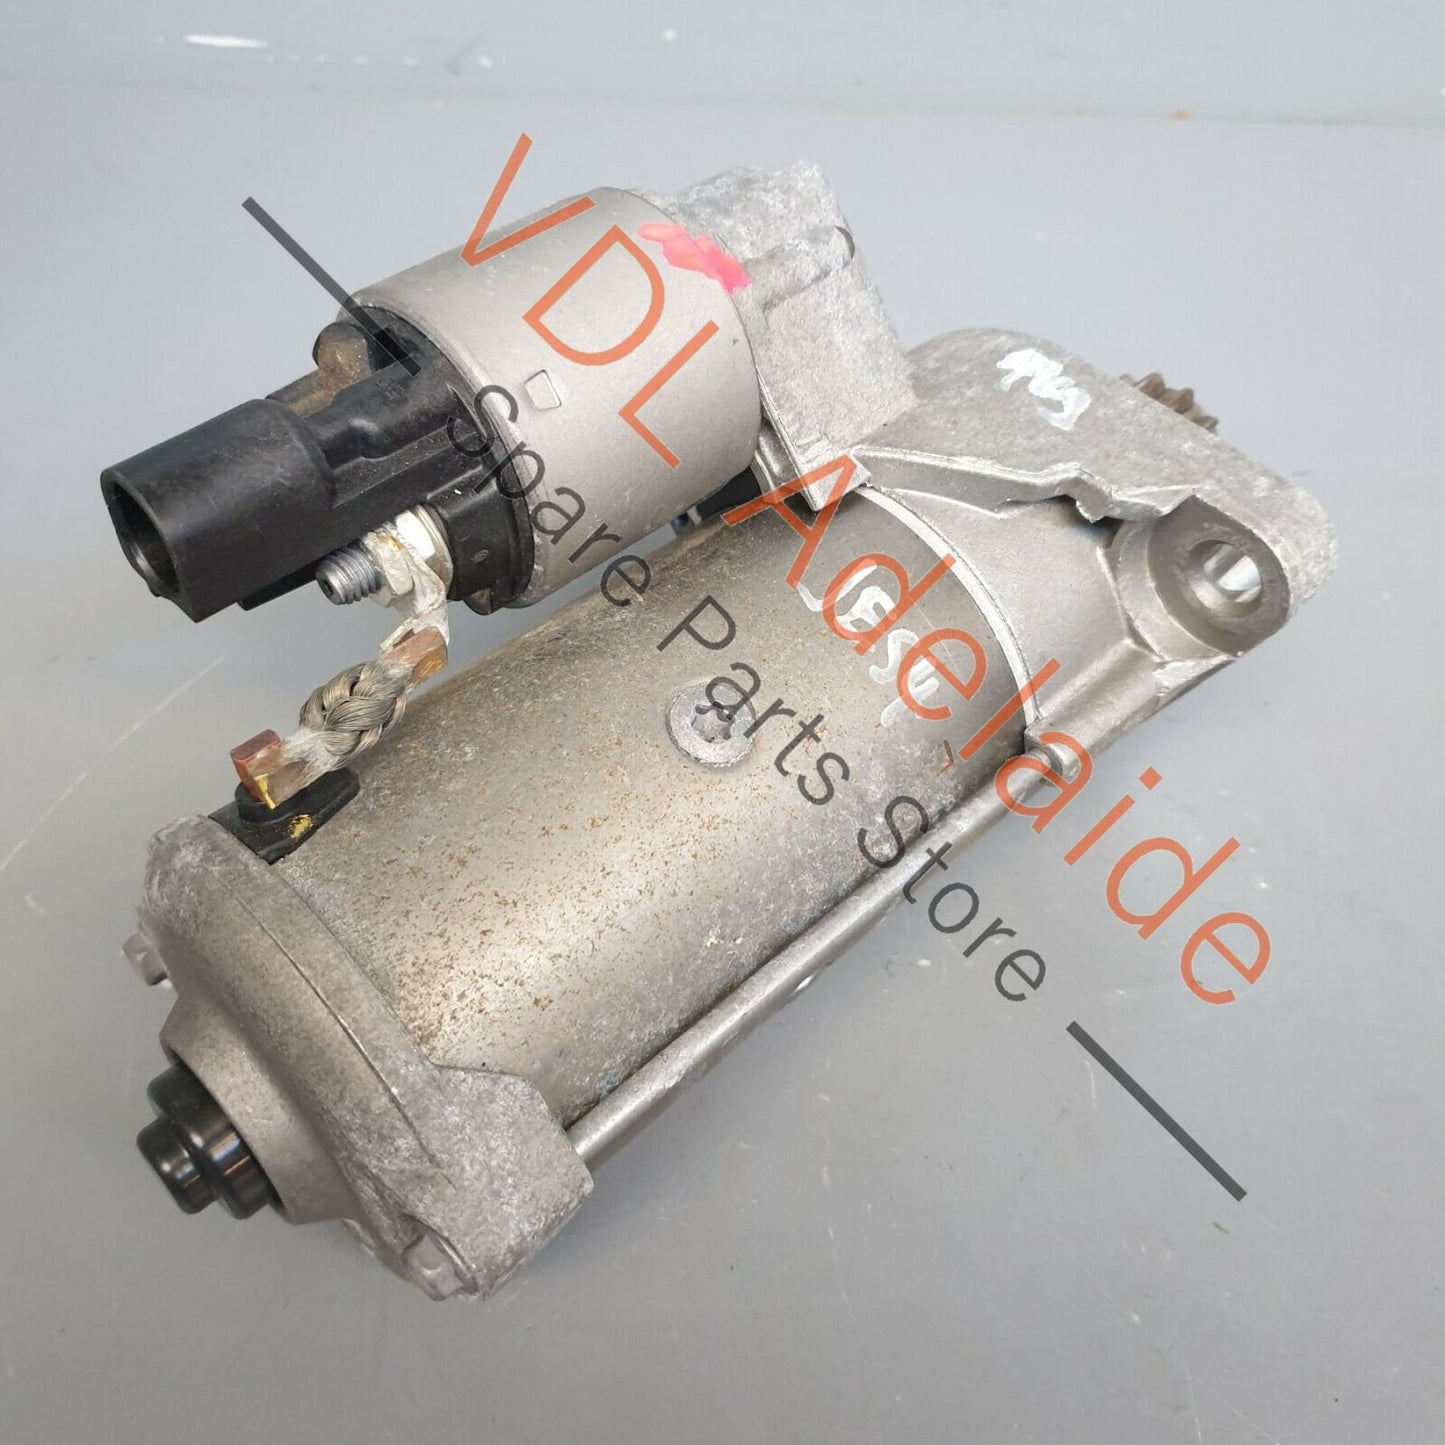 VW Tiguan MQB Mk2 Valeo 2.0kw Starter Motor for Start-Stop Vehicles 02E911022C 02E911022C